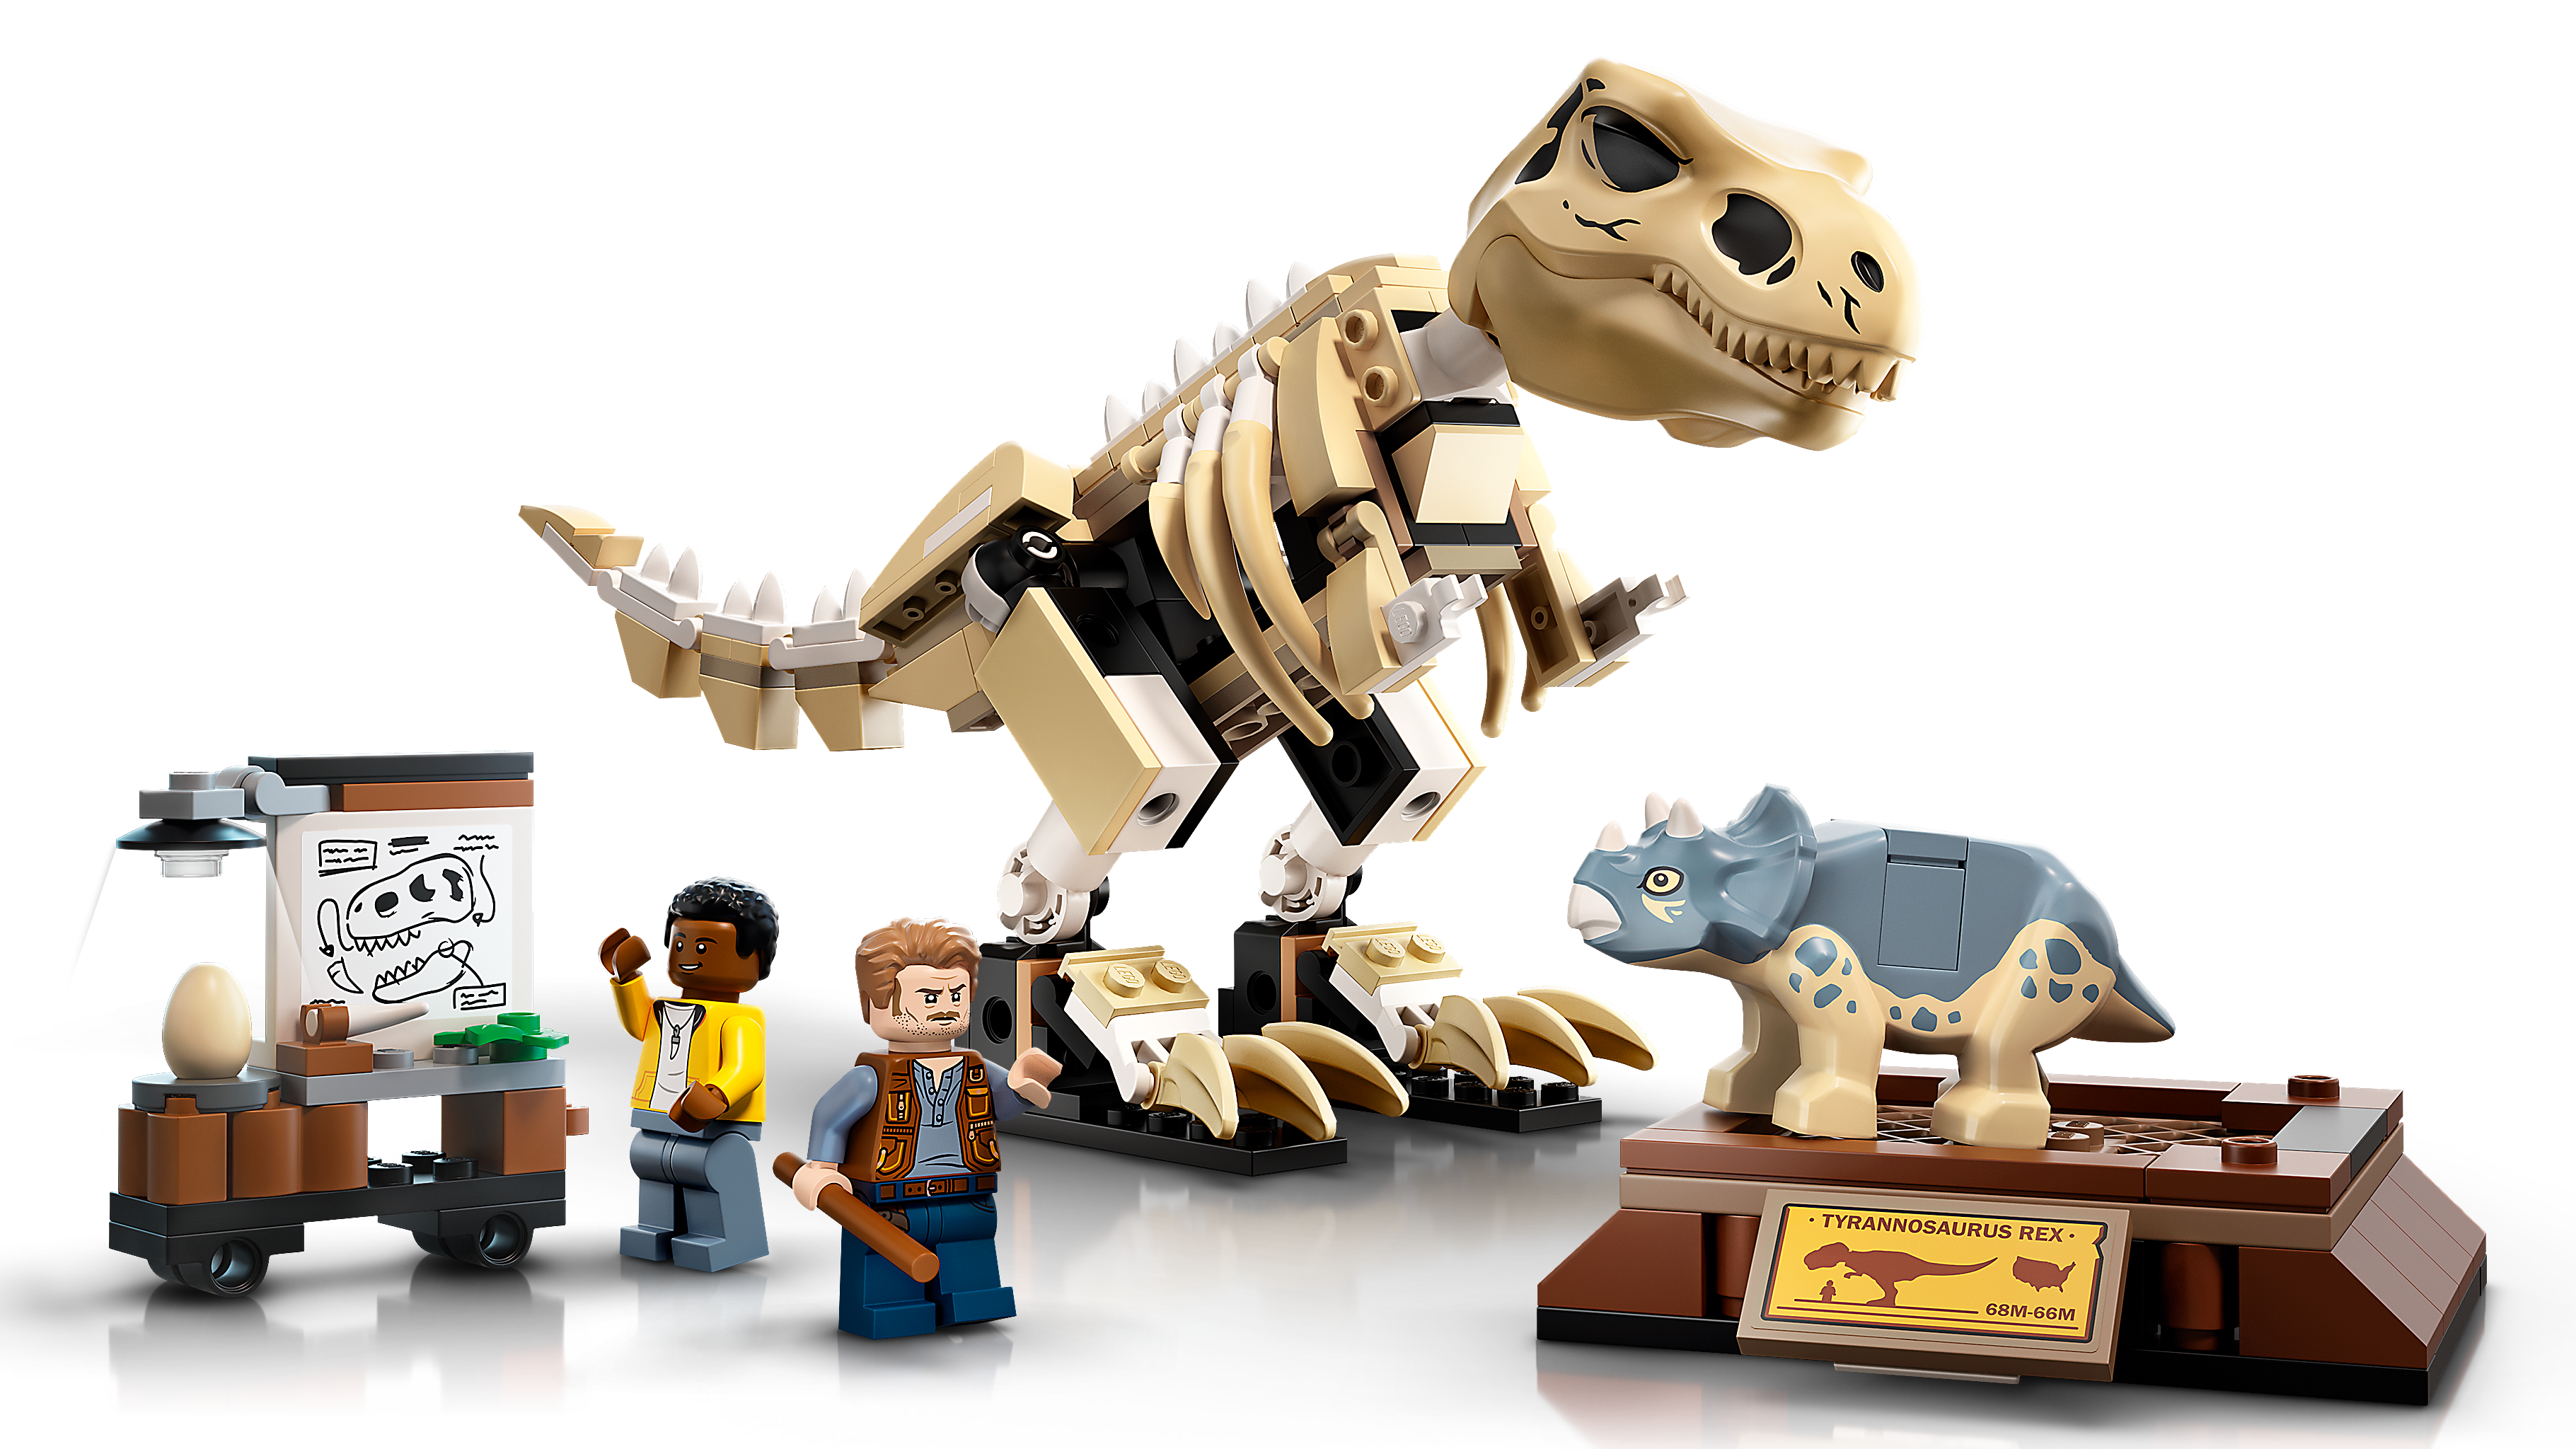 Lego 76940 Jurassic World T-Rex Dinosaur Fossil Exhibition 198 pieces ~Brand New